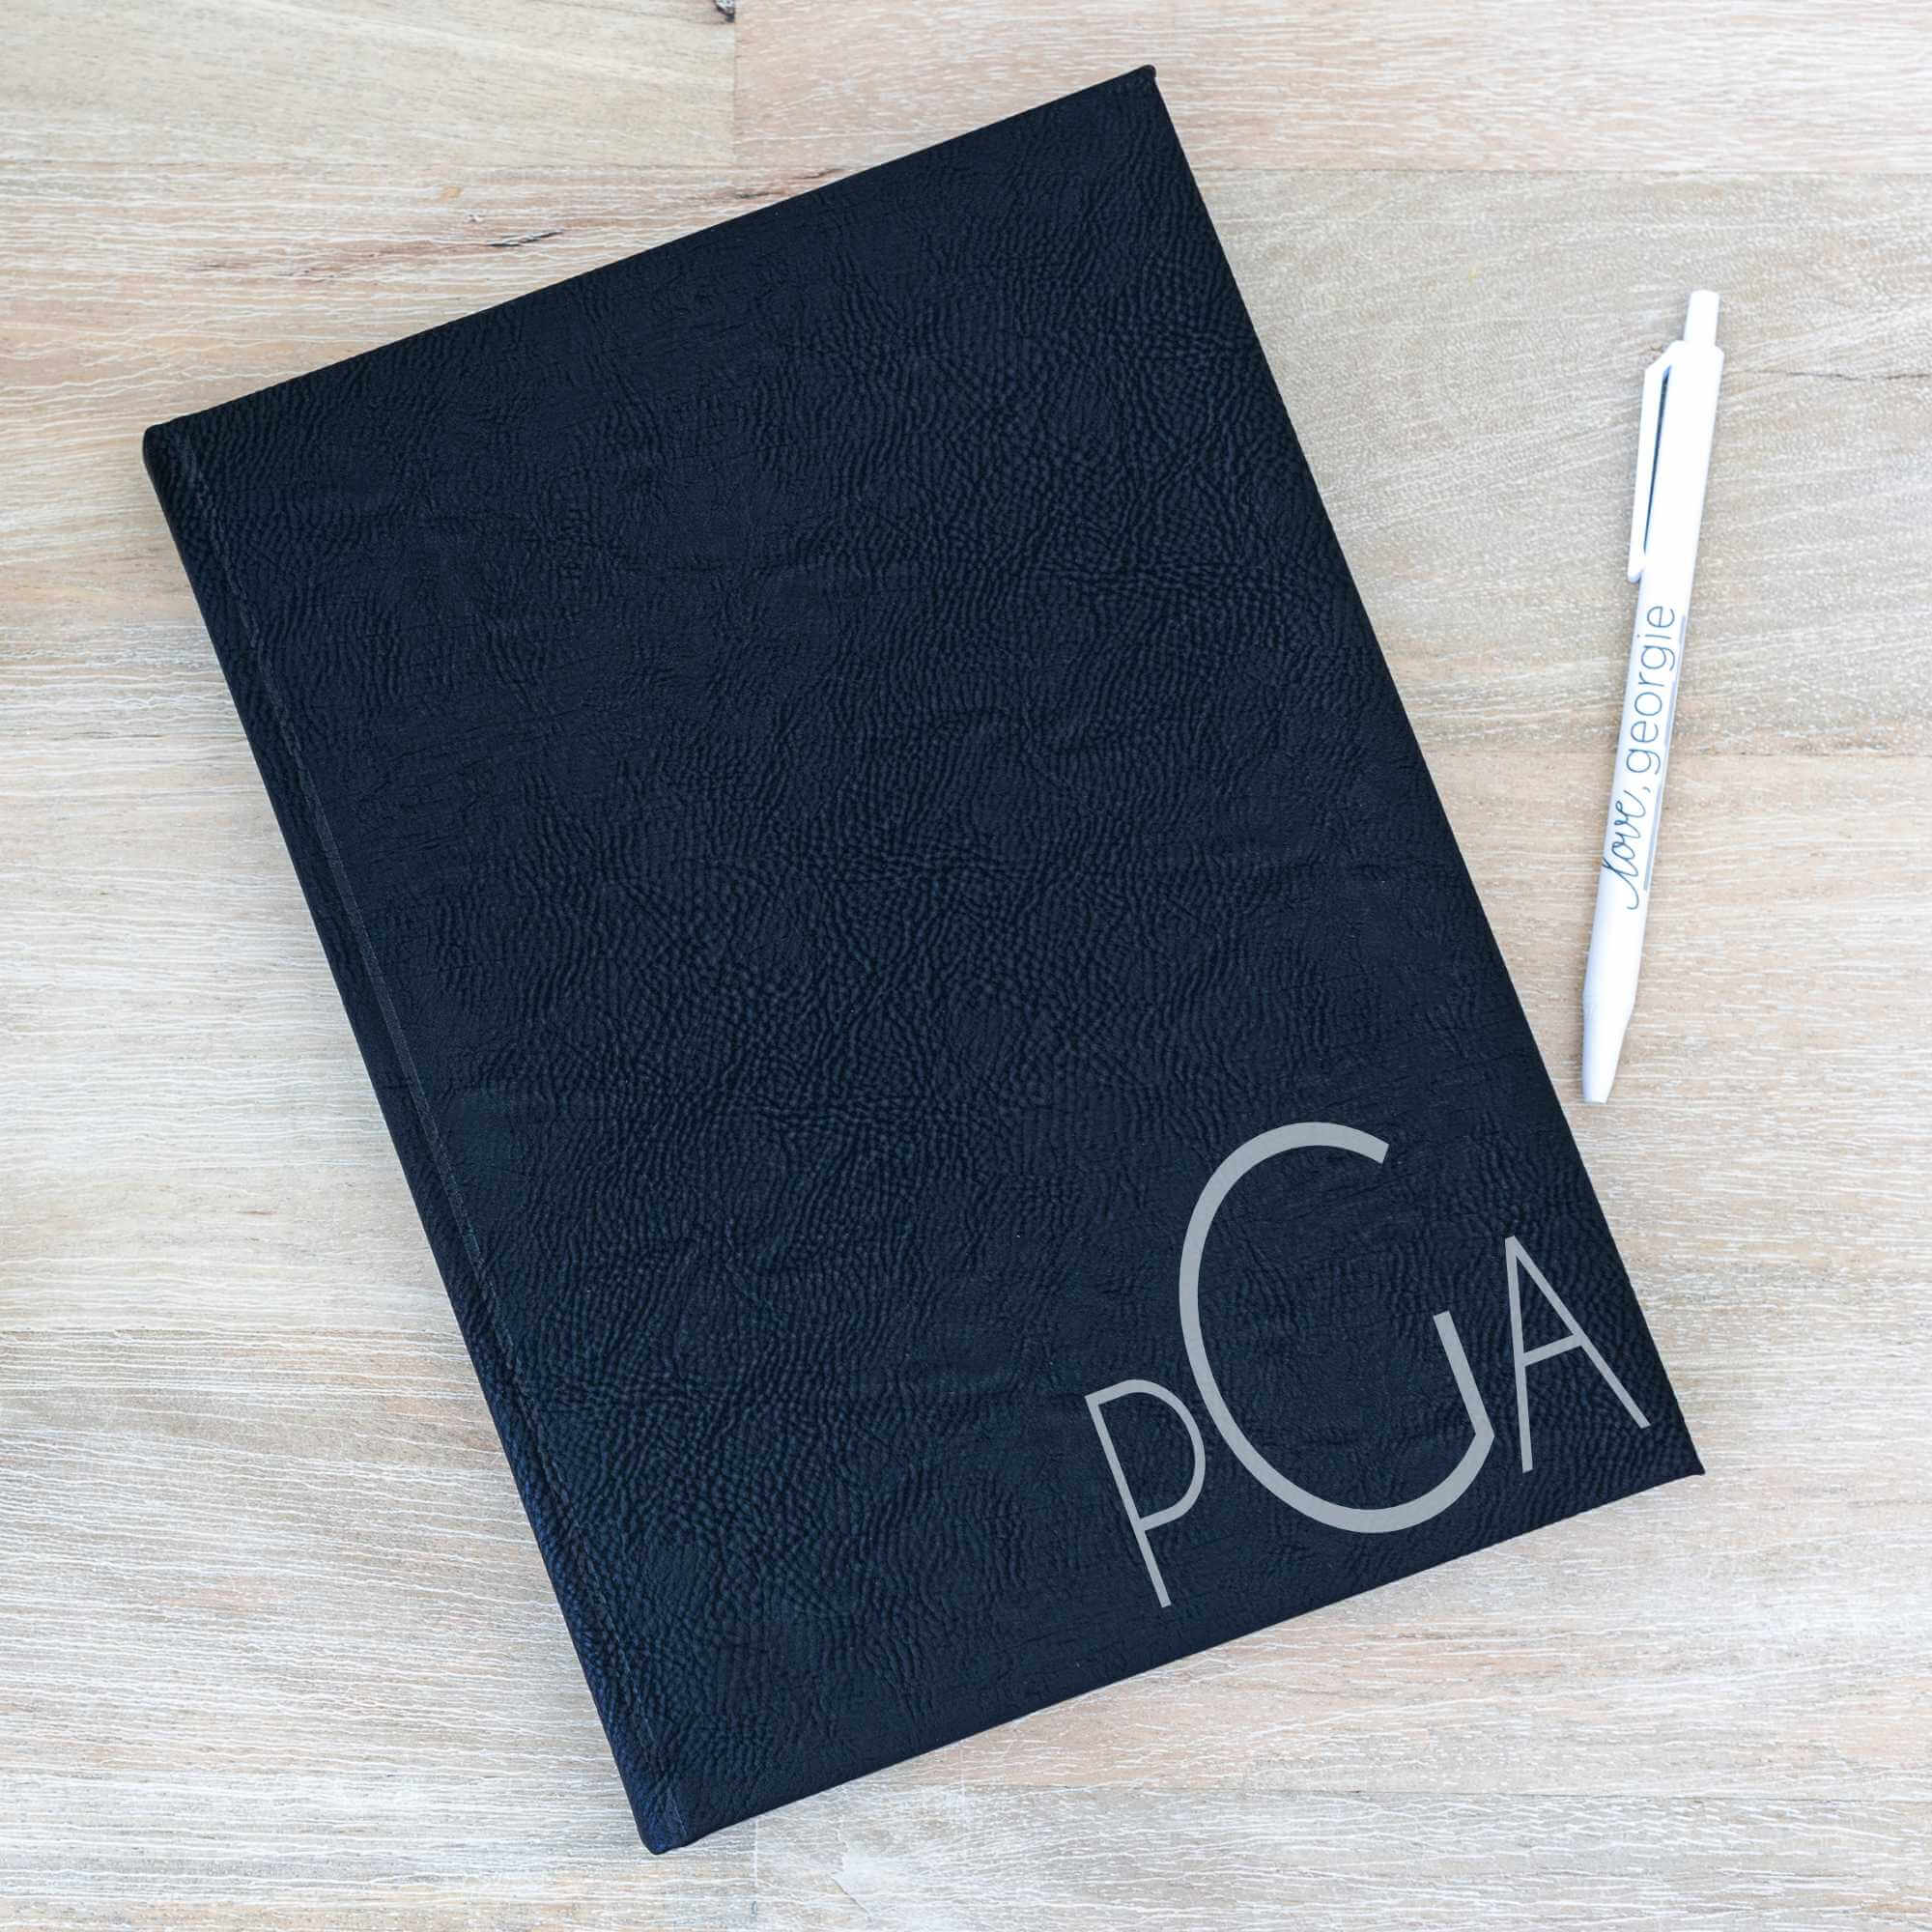 Sketchbook with Monogram - Vegan Leather